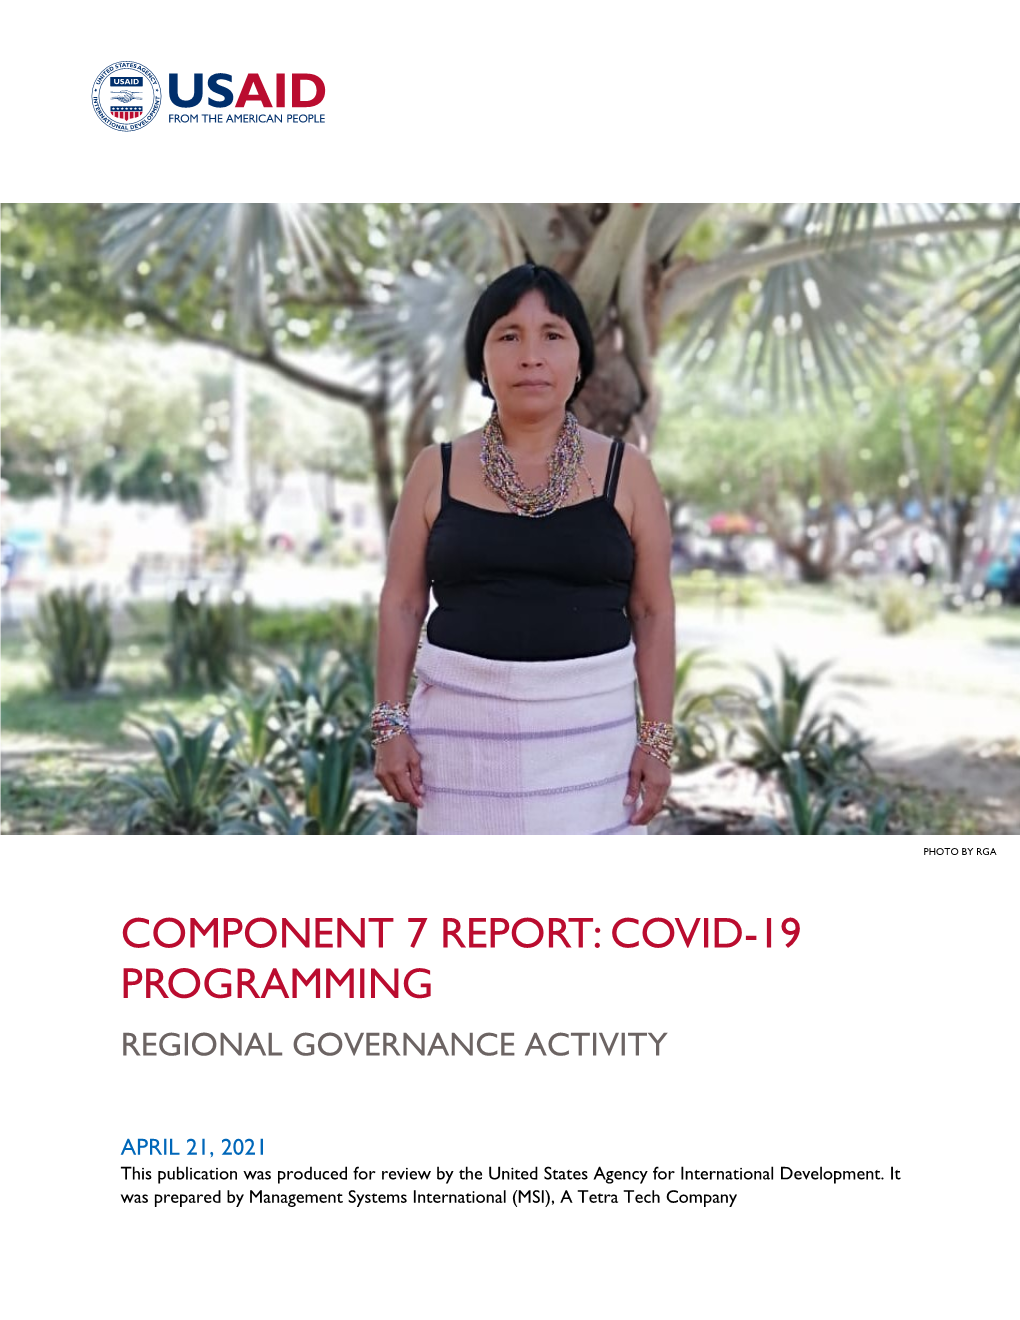 Covid-19 Programming Regional Governance Activity